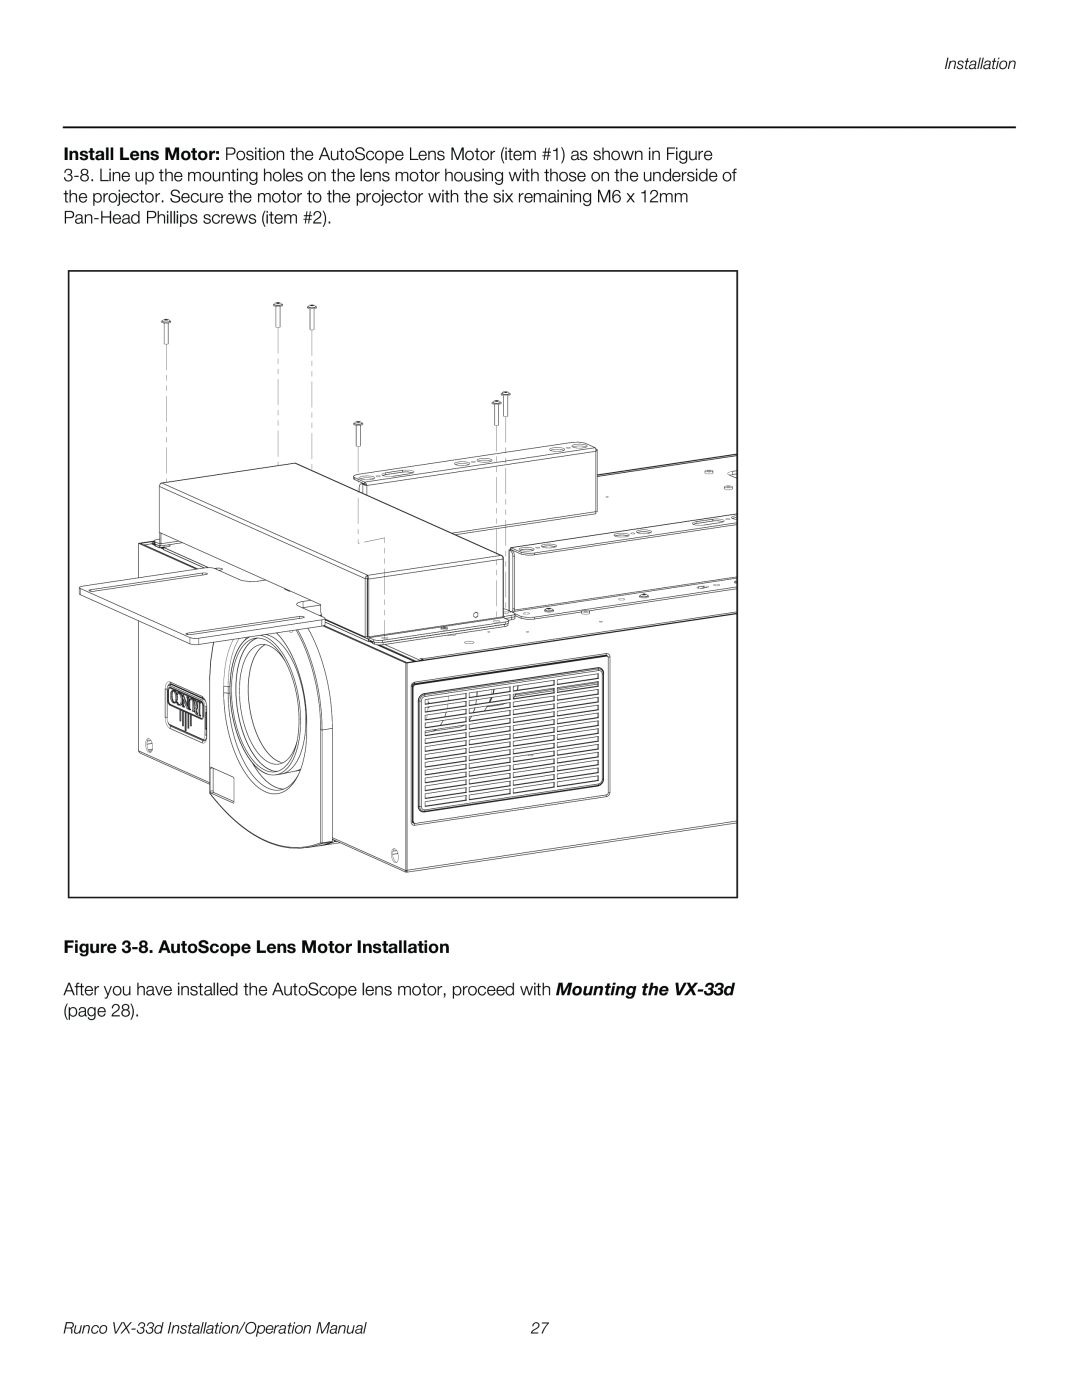 Runco VX-33D operation manual 8. AutoScope Lens Motor Installation 